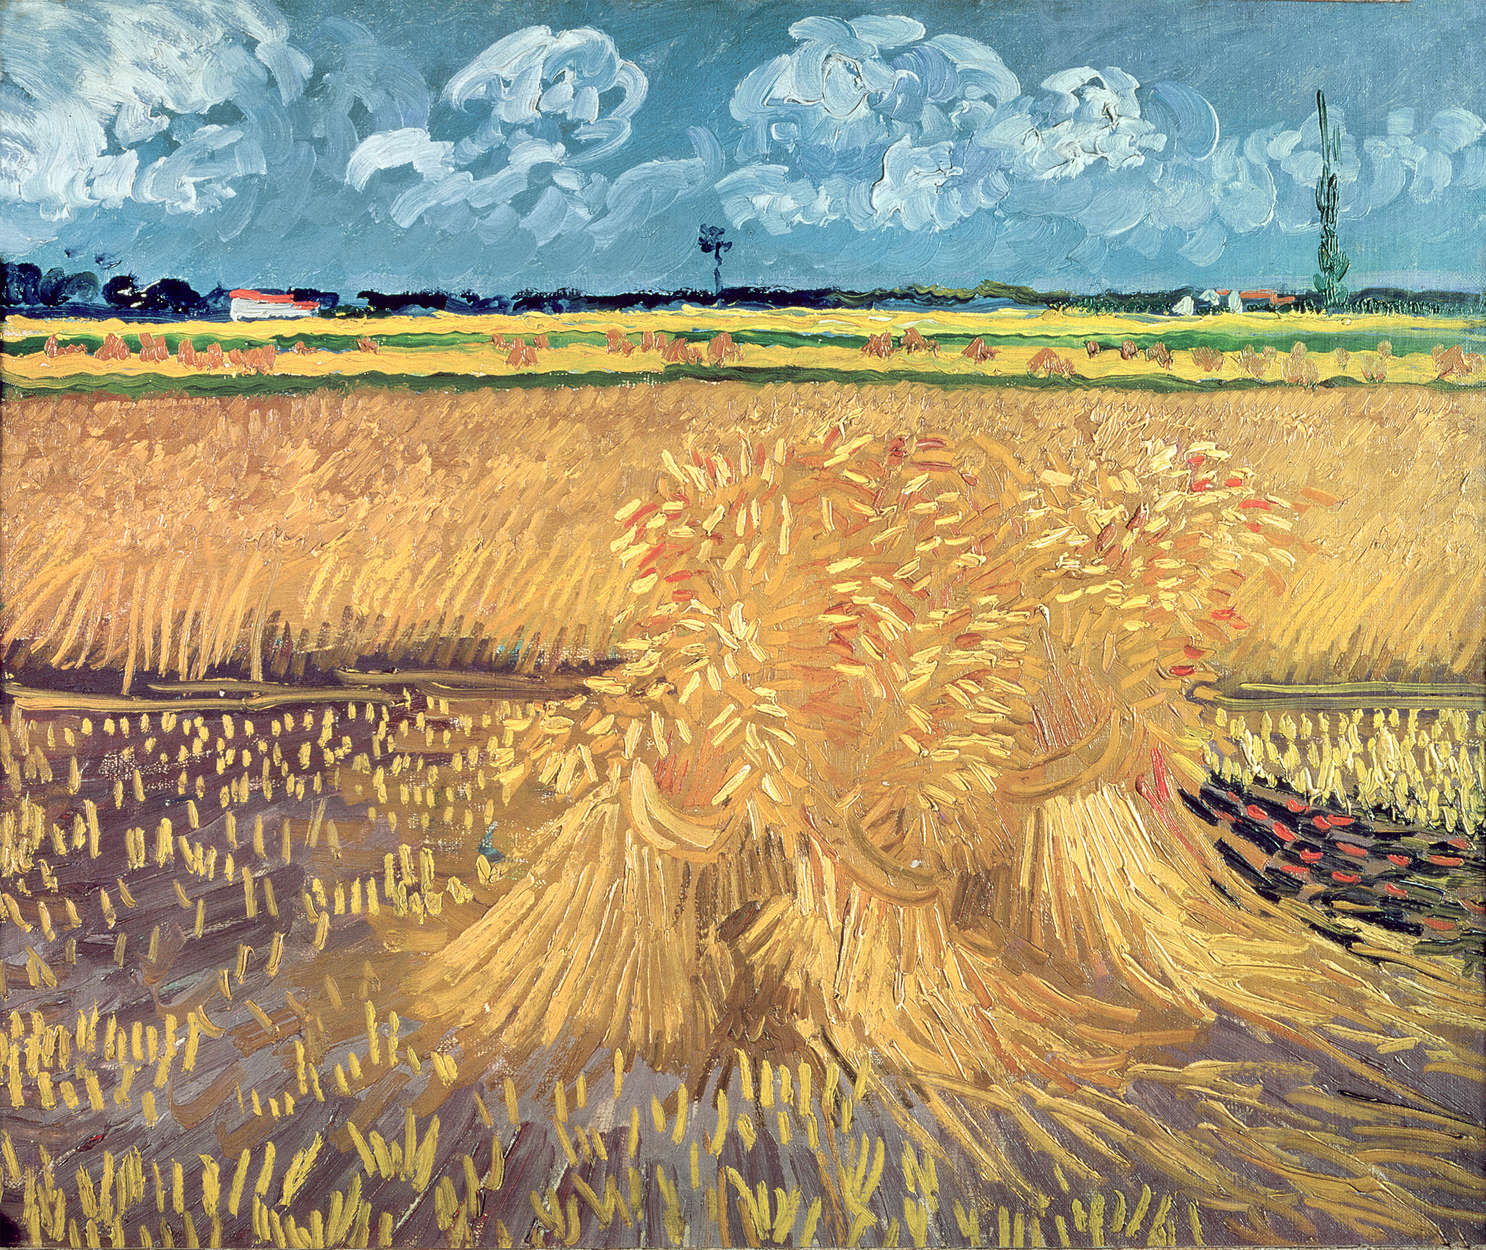             Mural "Cuervos sobre un campo de trigo" de Vincent van Gogh
        